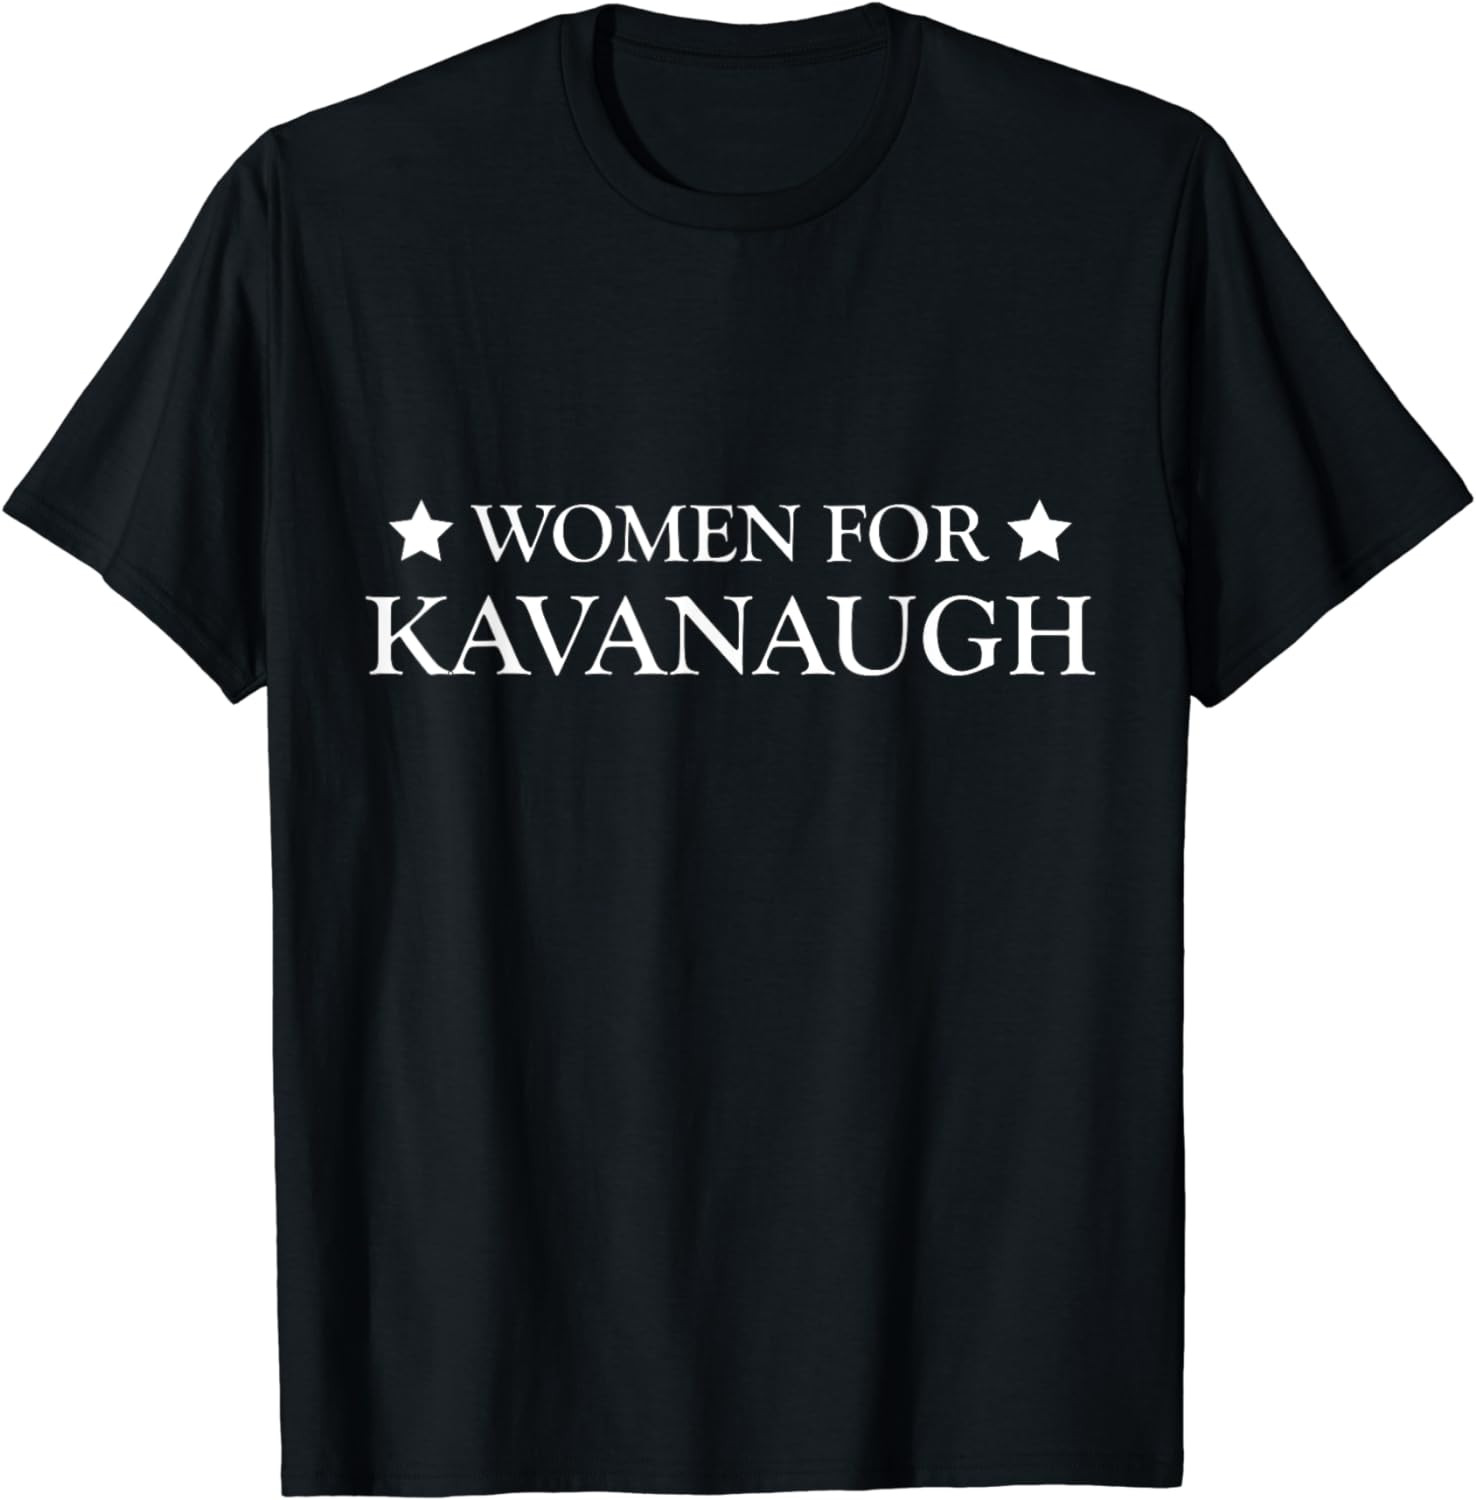 Women For Kavanaugh Tee Shirt - Approve Brett